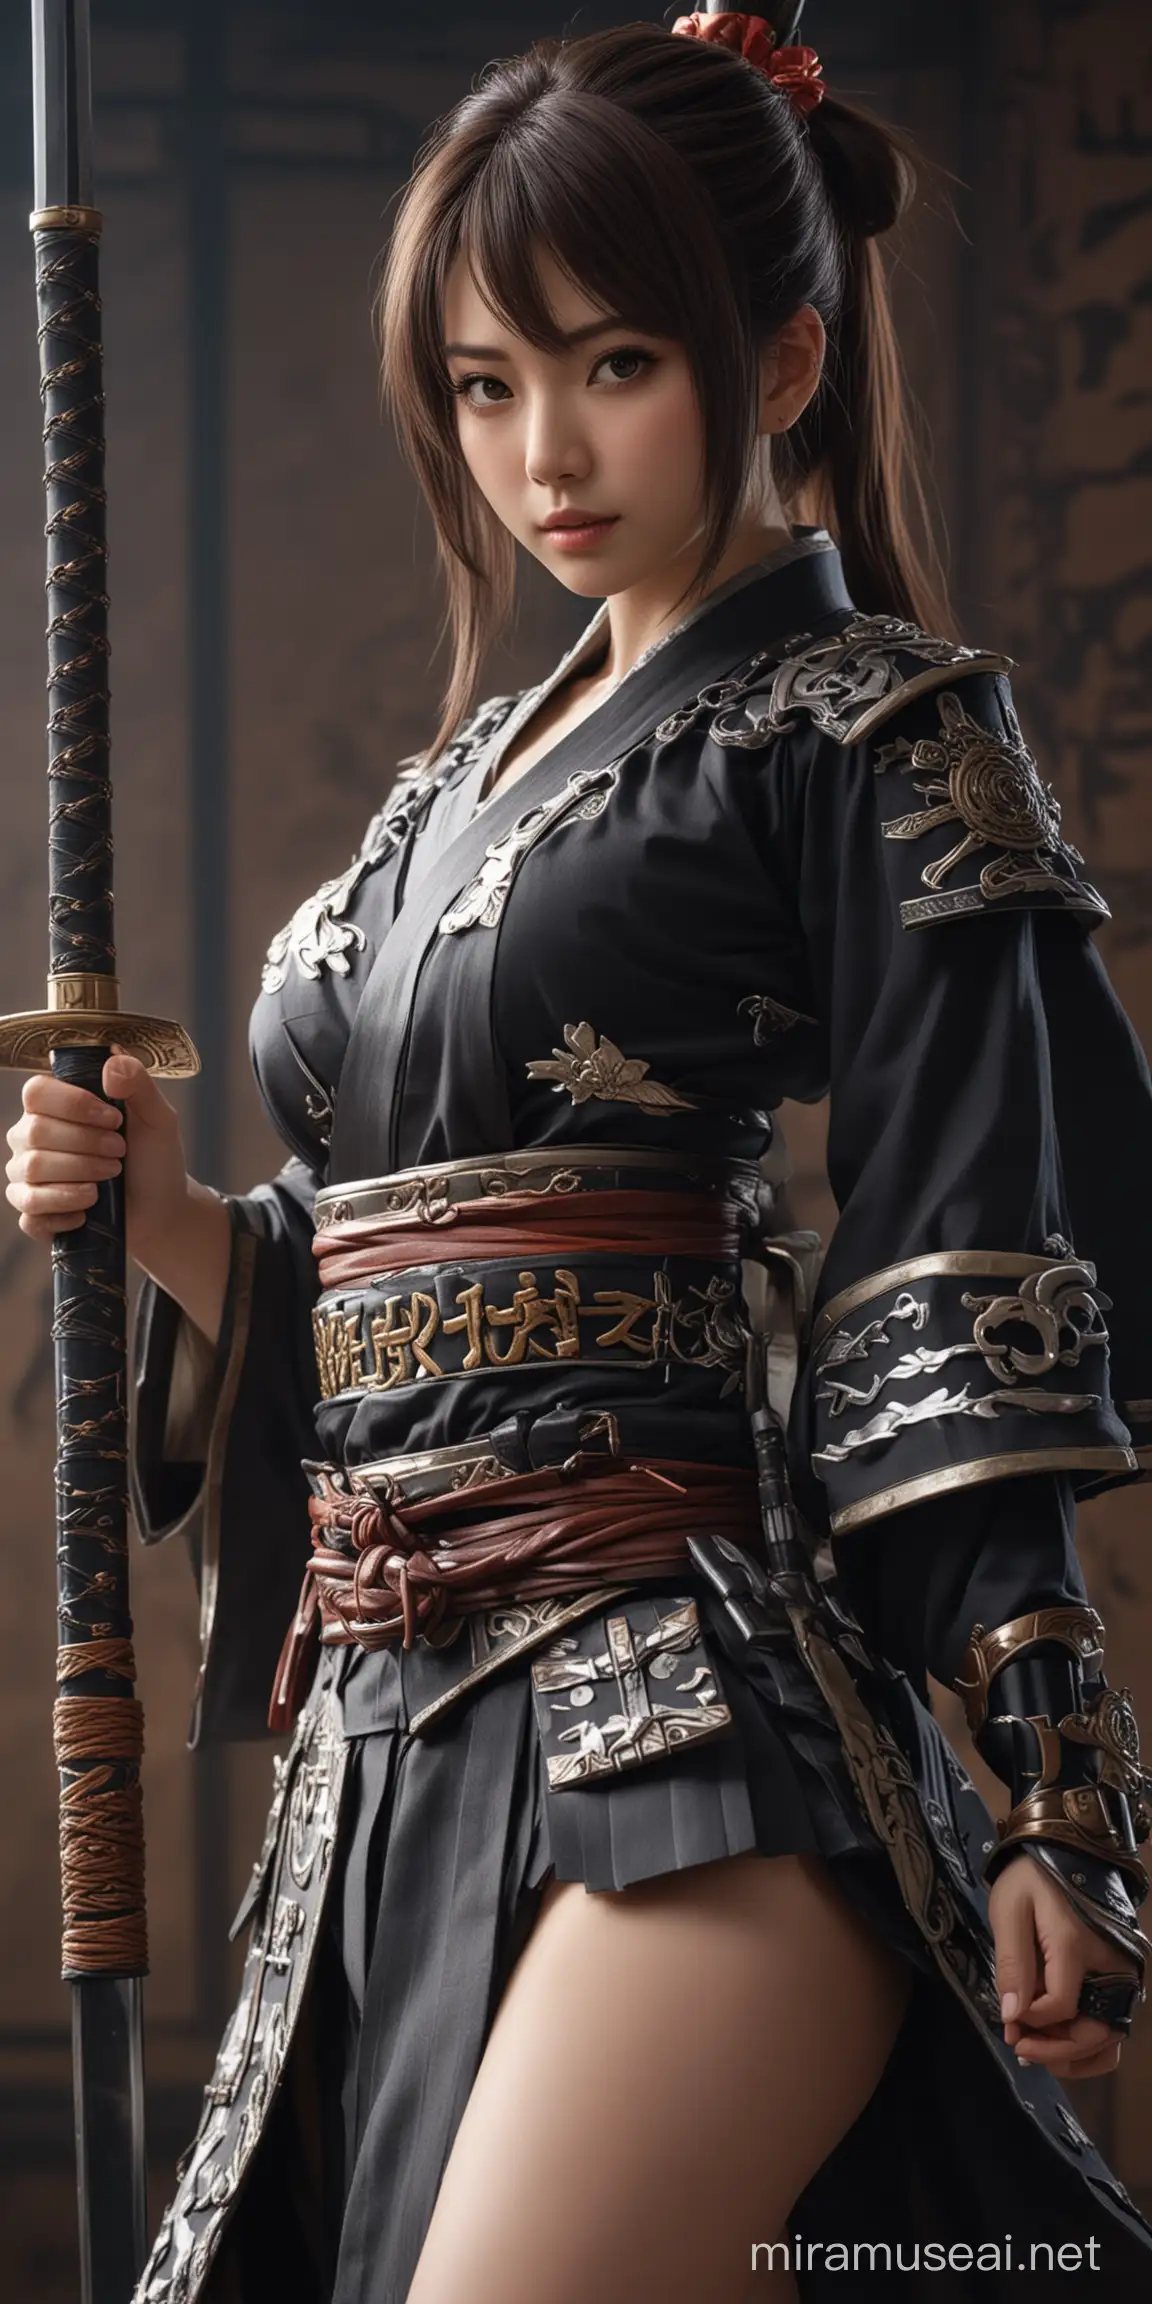 Gadis idol realistis yang sangat cantik, tengu element sexy samurai, background fantasy isekai, fotostudio yang sangat detail, cinematic studio lighting, focused medium shot (3/4 shot) , HD, no eror